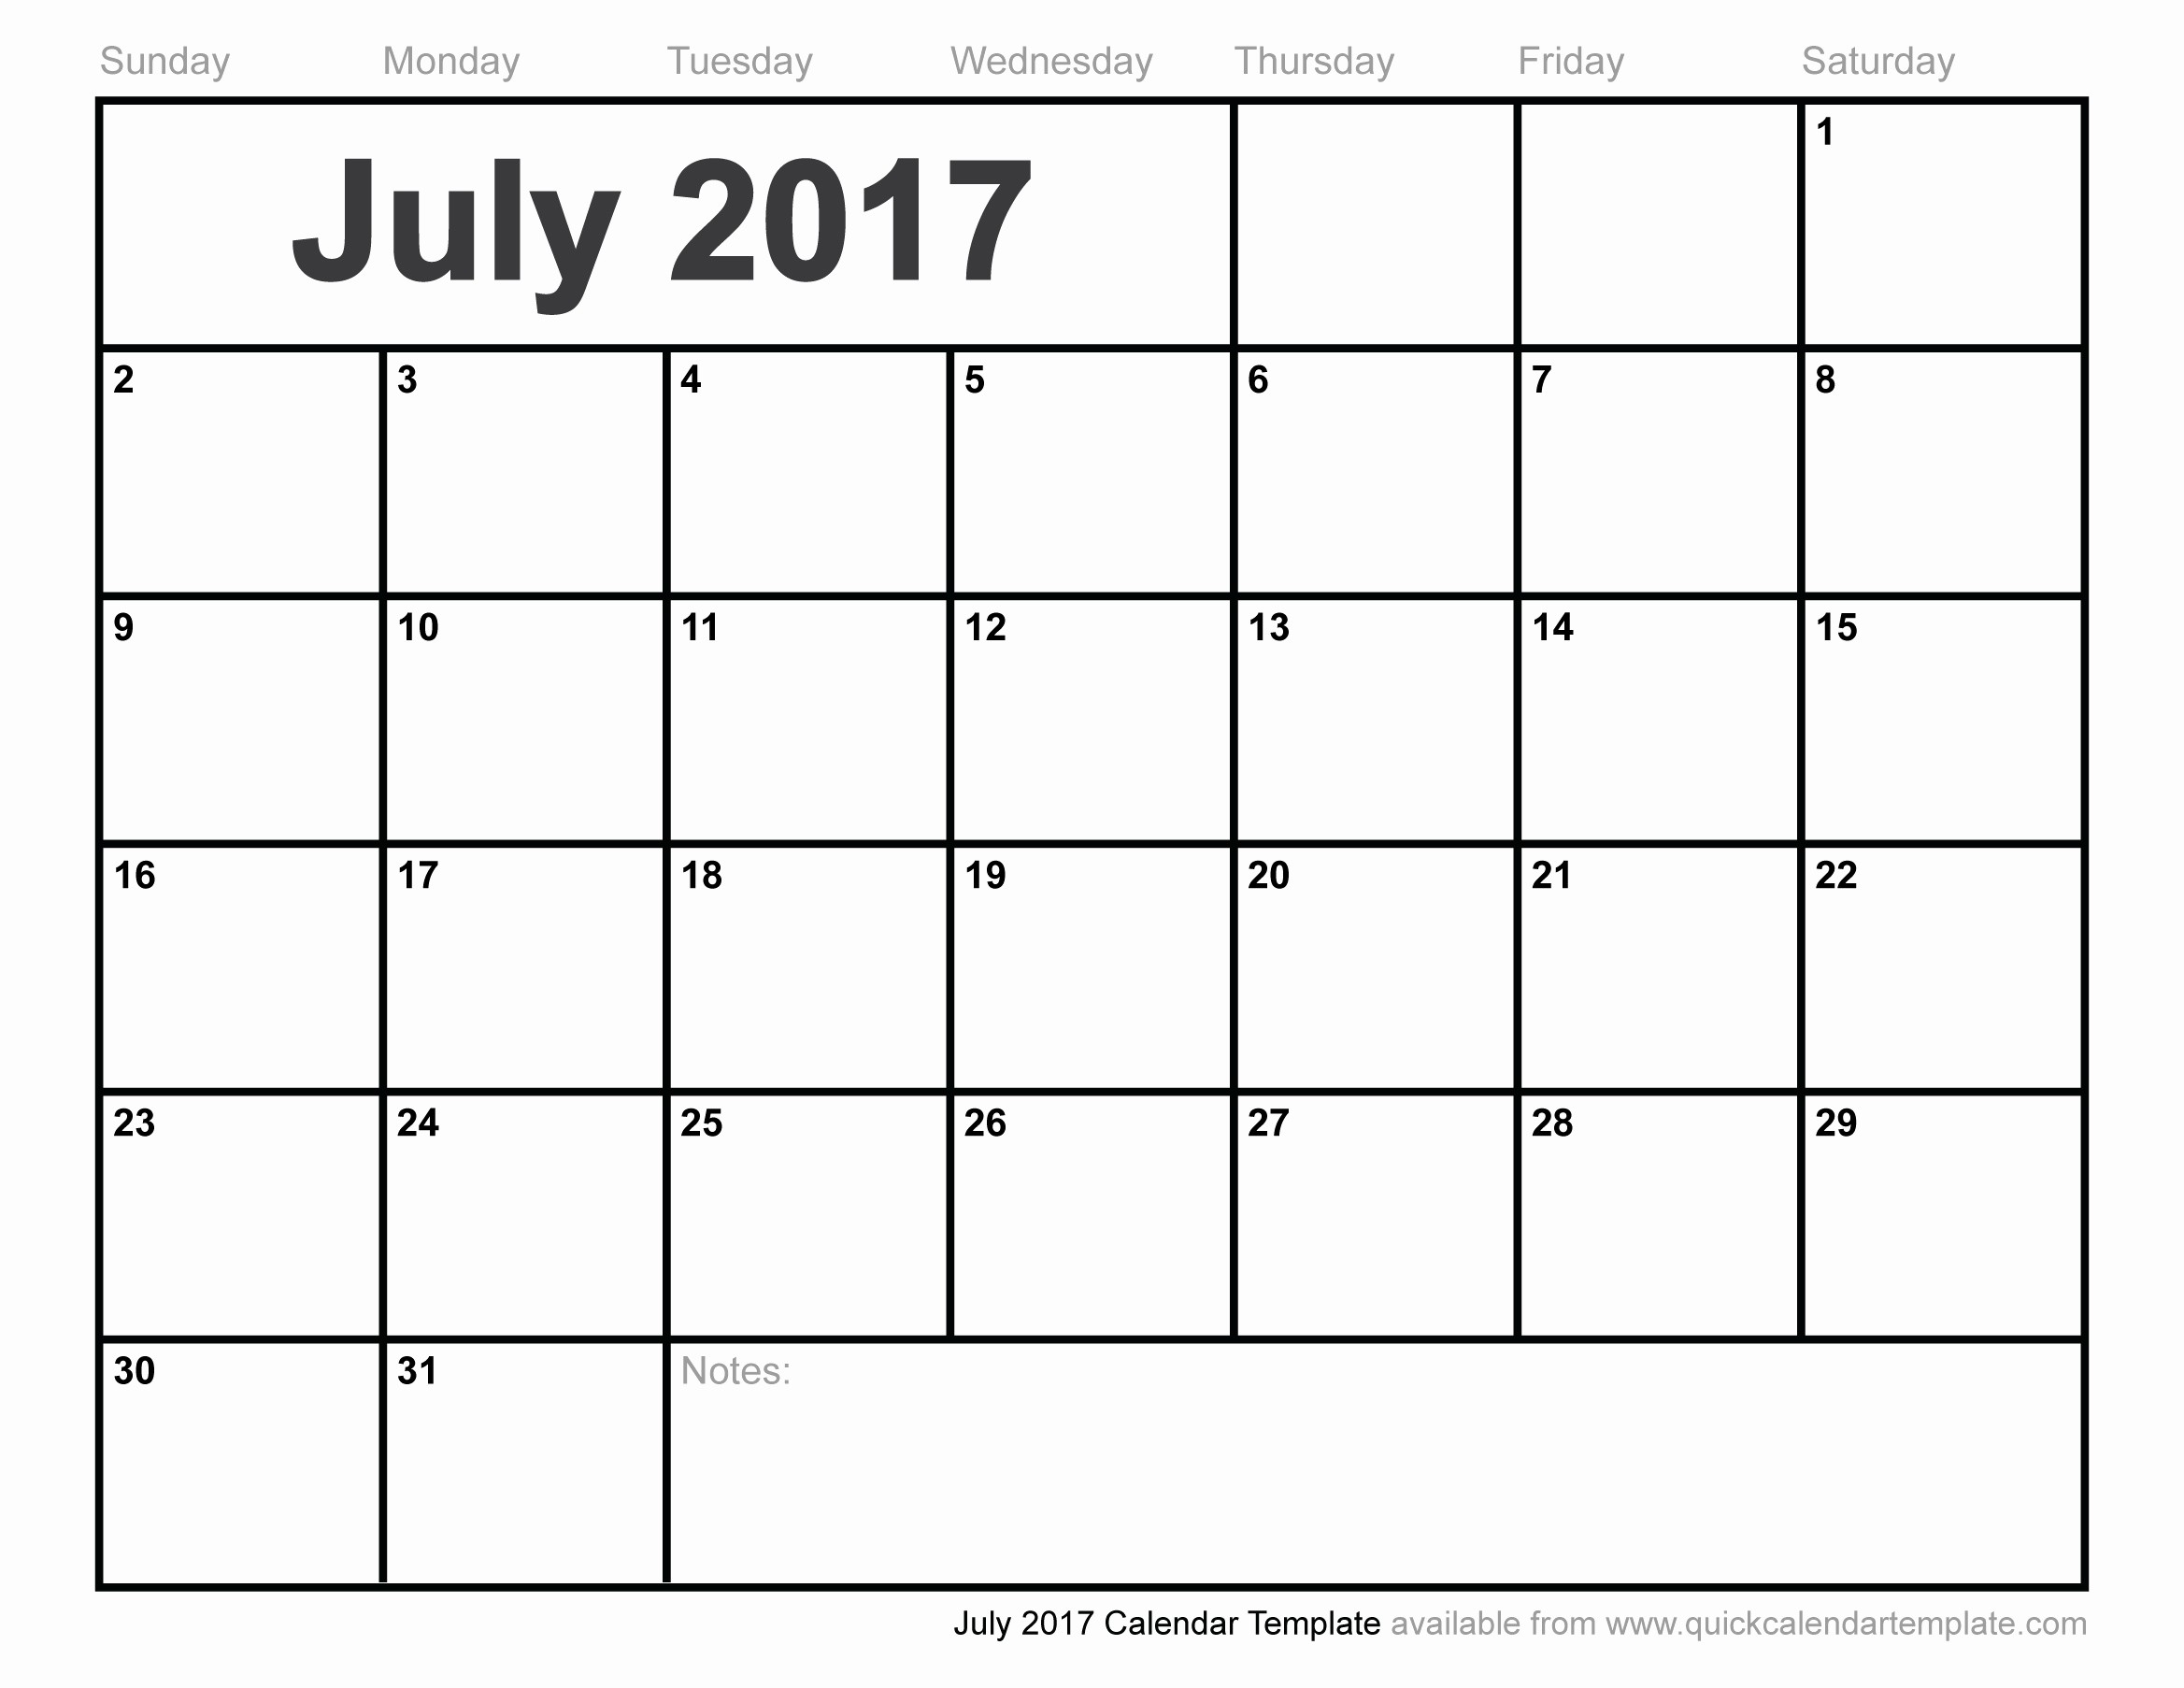 2017 Quarterly Calendar Template Excel Fresh July 2017 Calendar Pdf